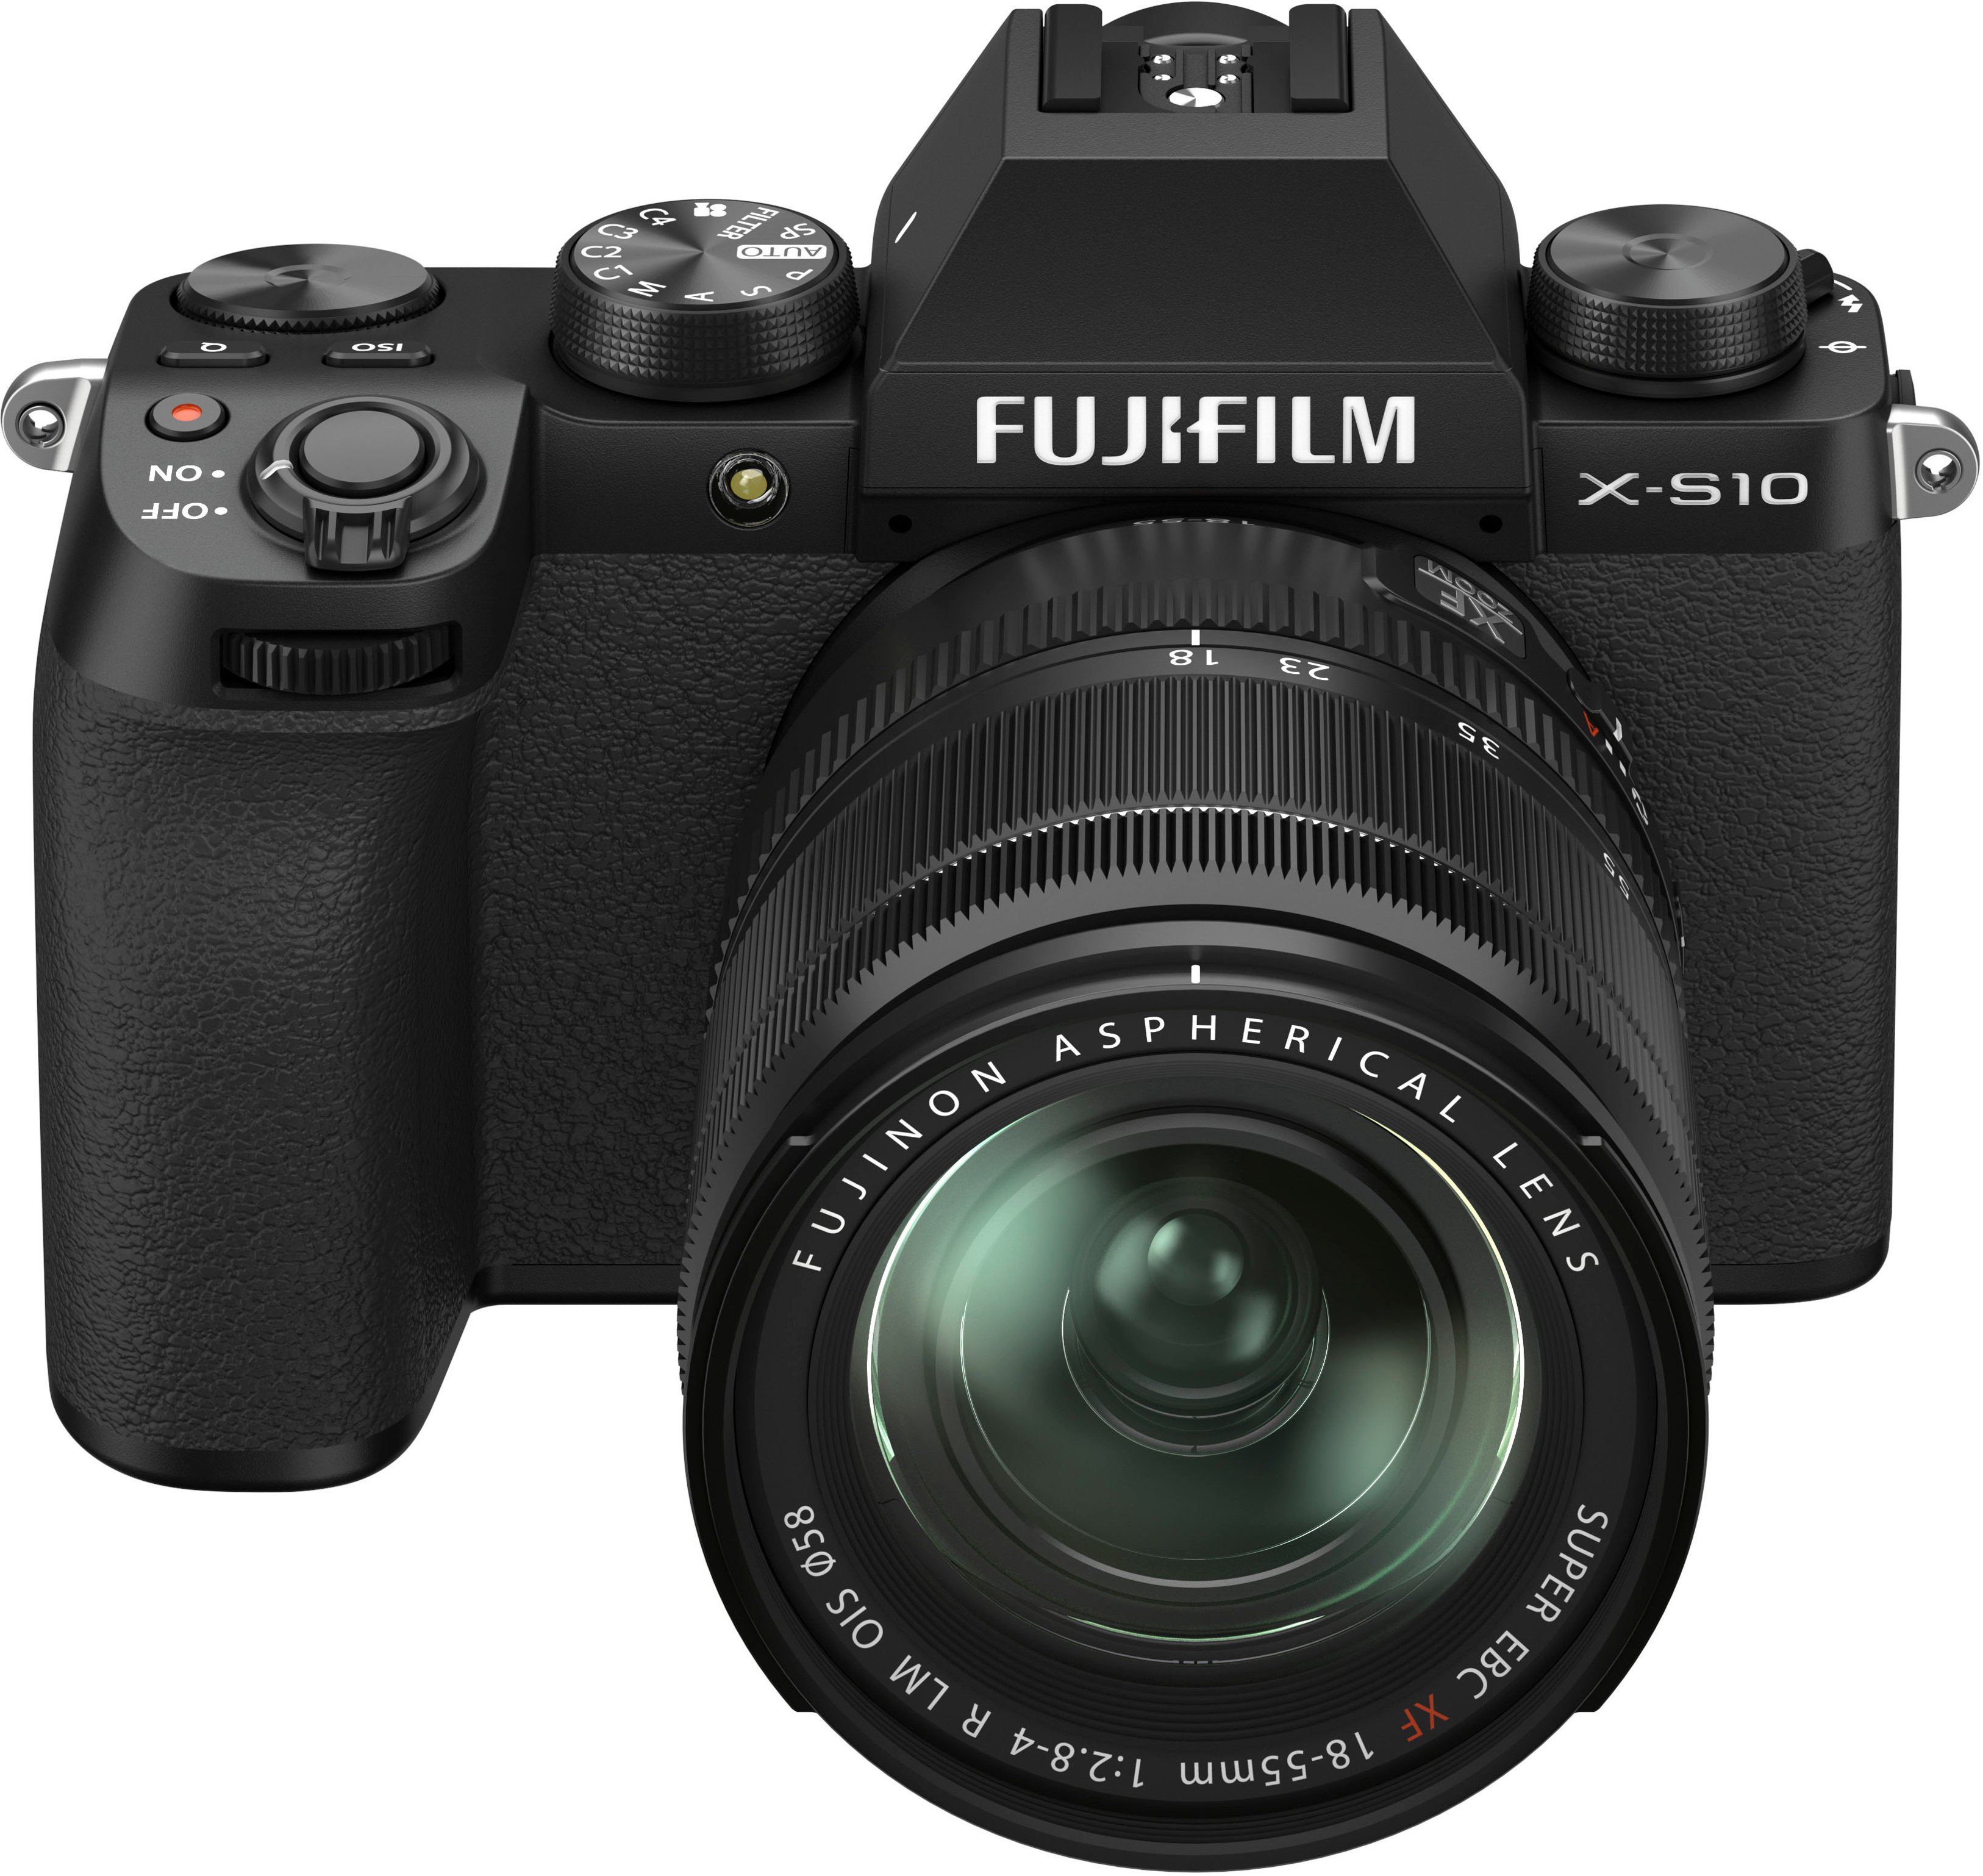 Fujifilm X-S10 Mirrorless Camera Body with XF18-55mmF2.8-4 R